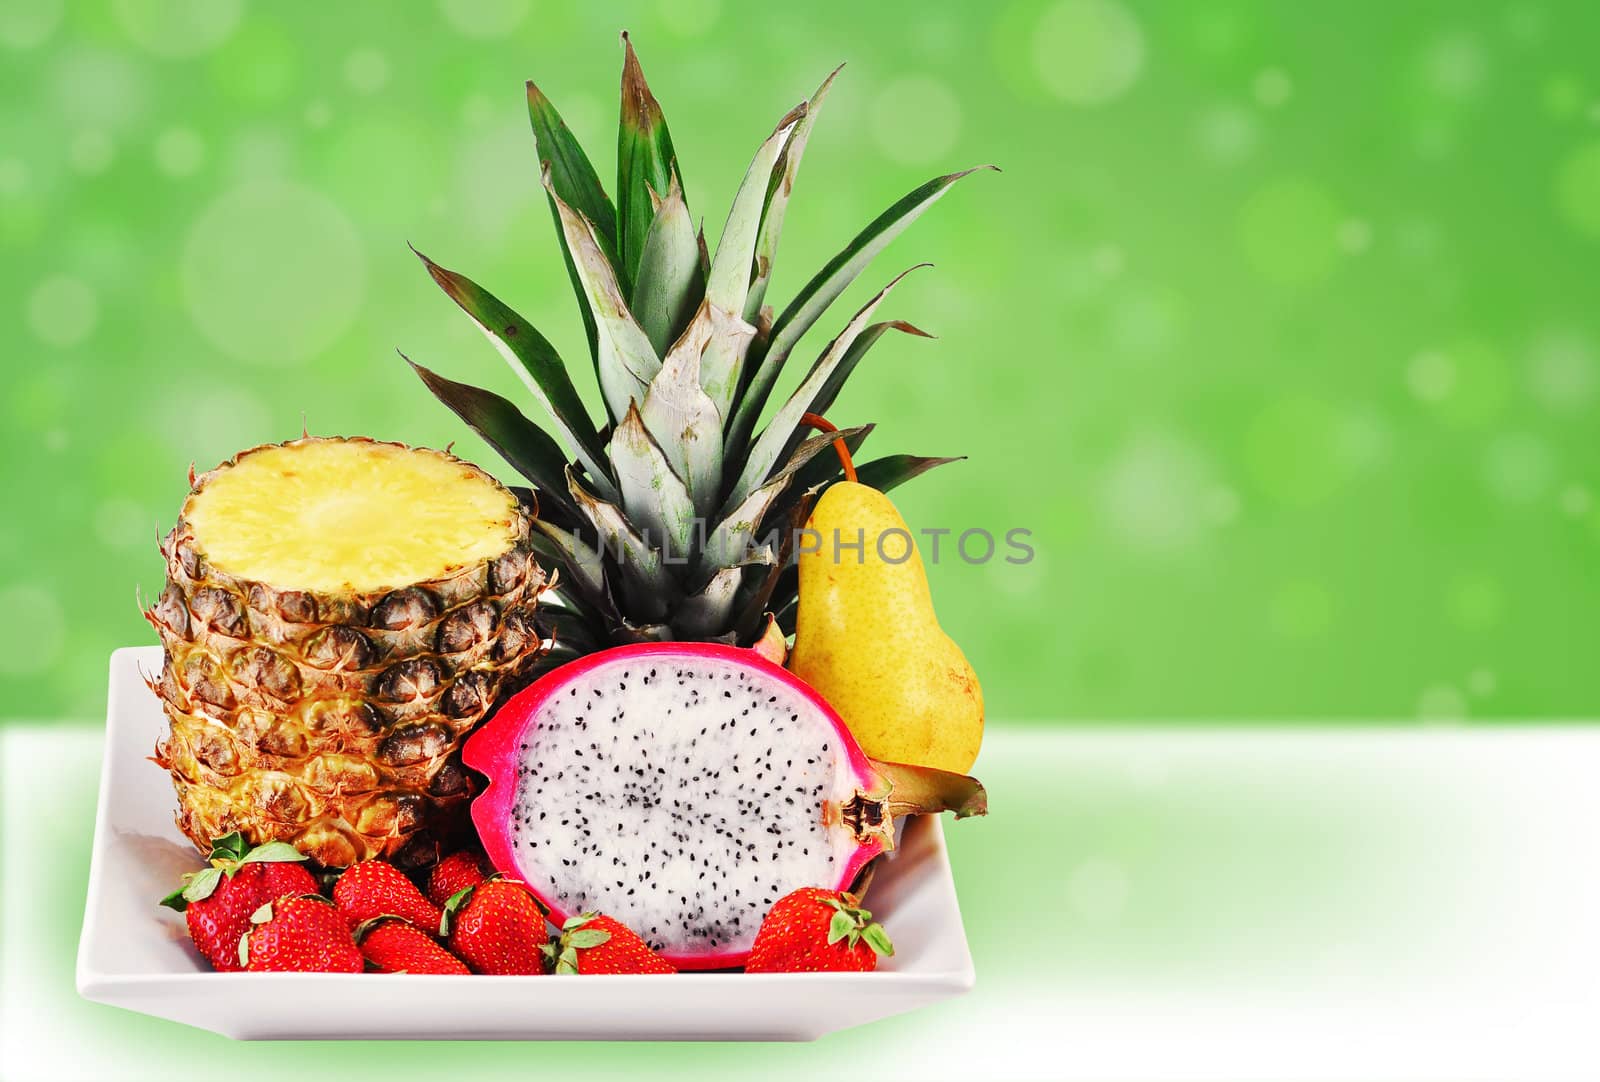 Fun tropical fruit mix by Mirage3